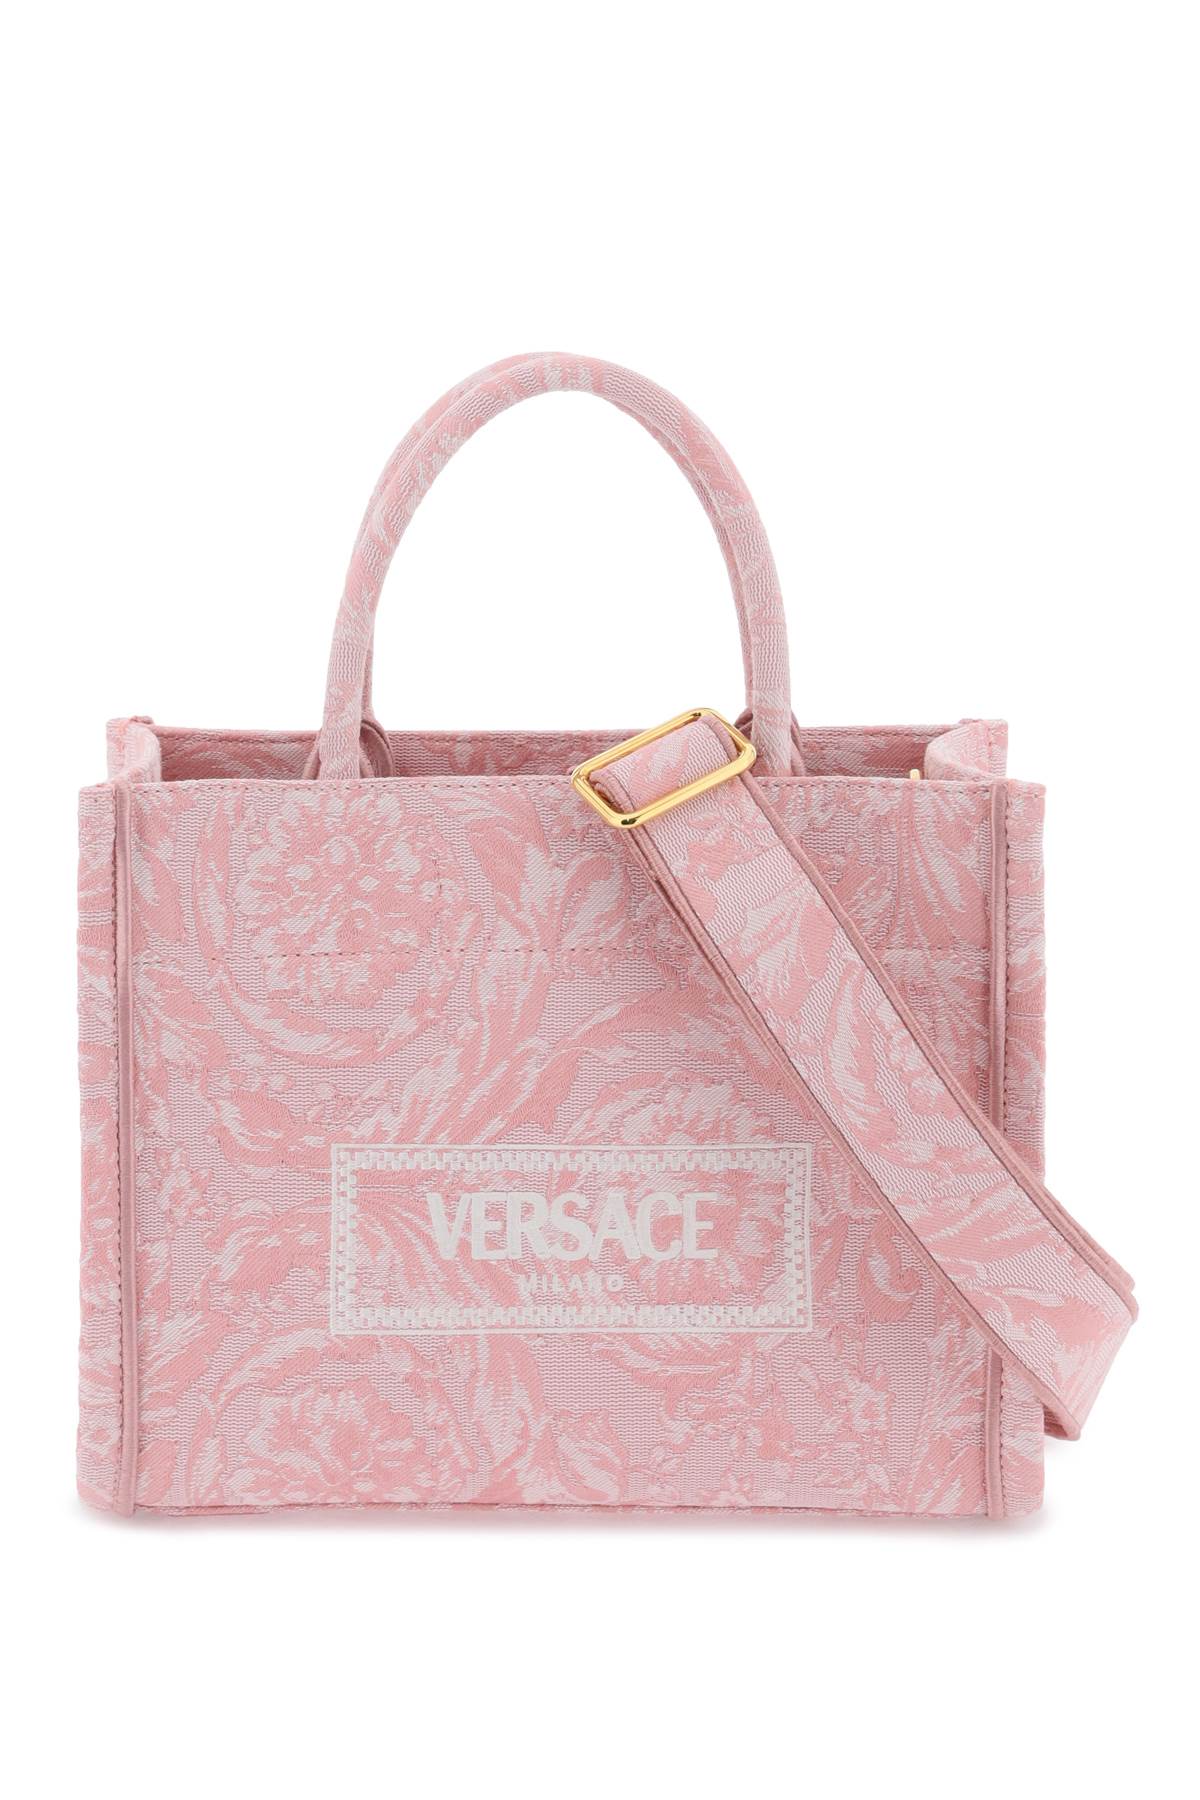 Versace Pink Woven Bag